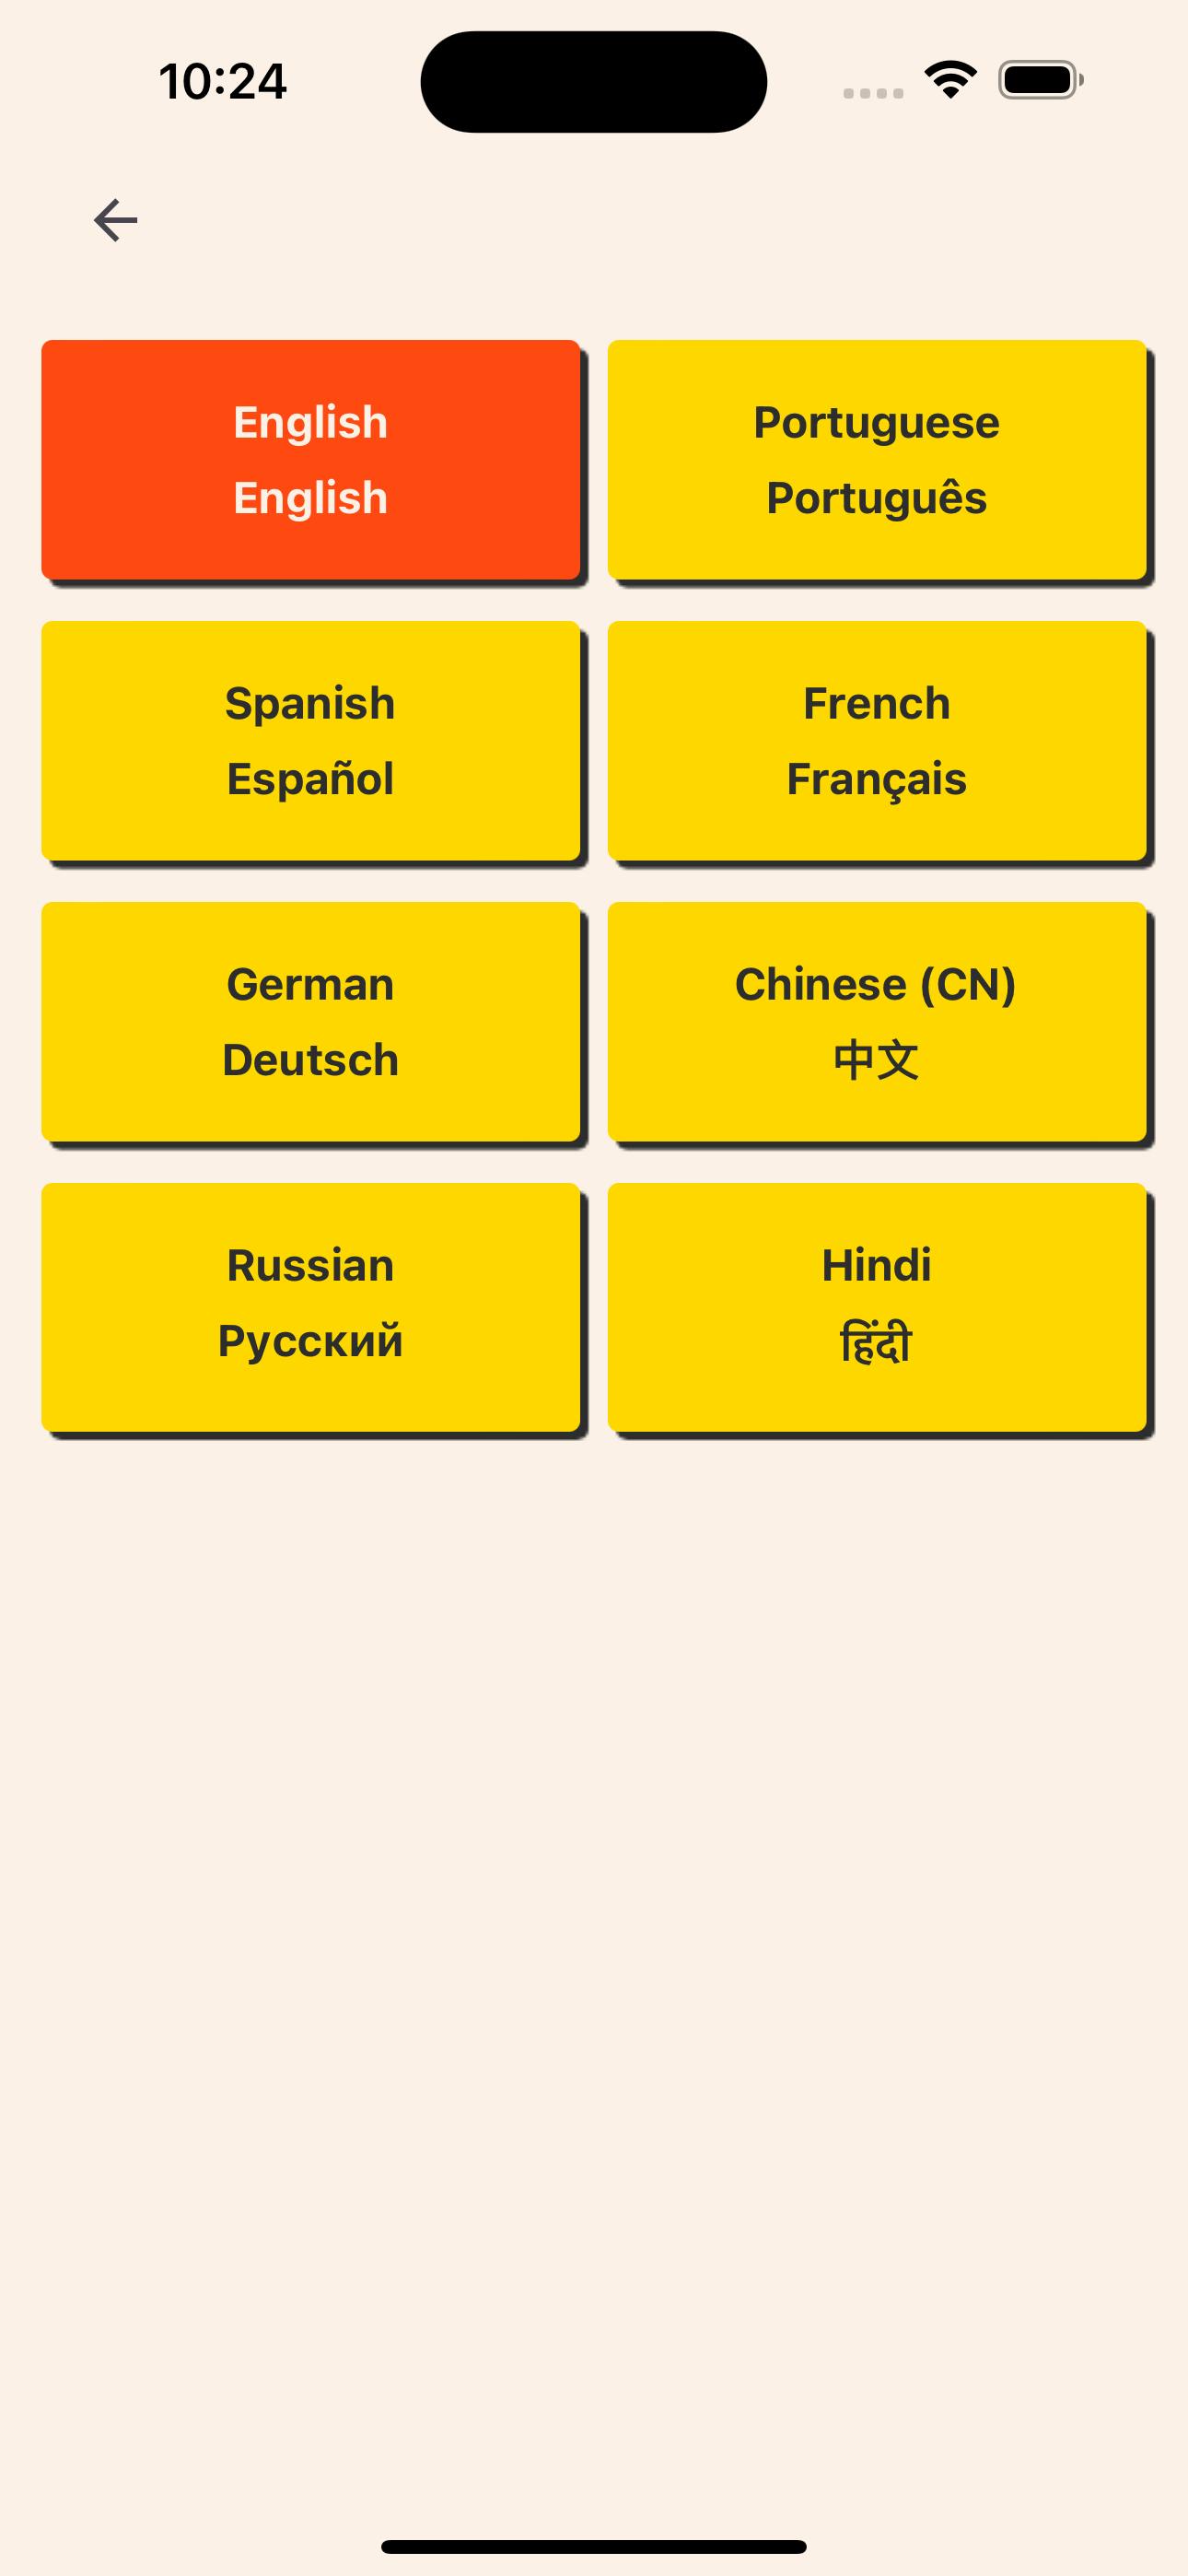 Our language selectiion UI